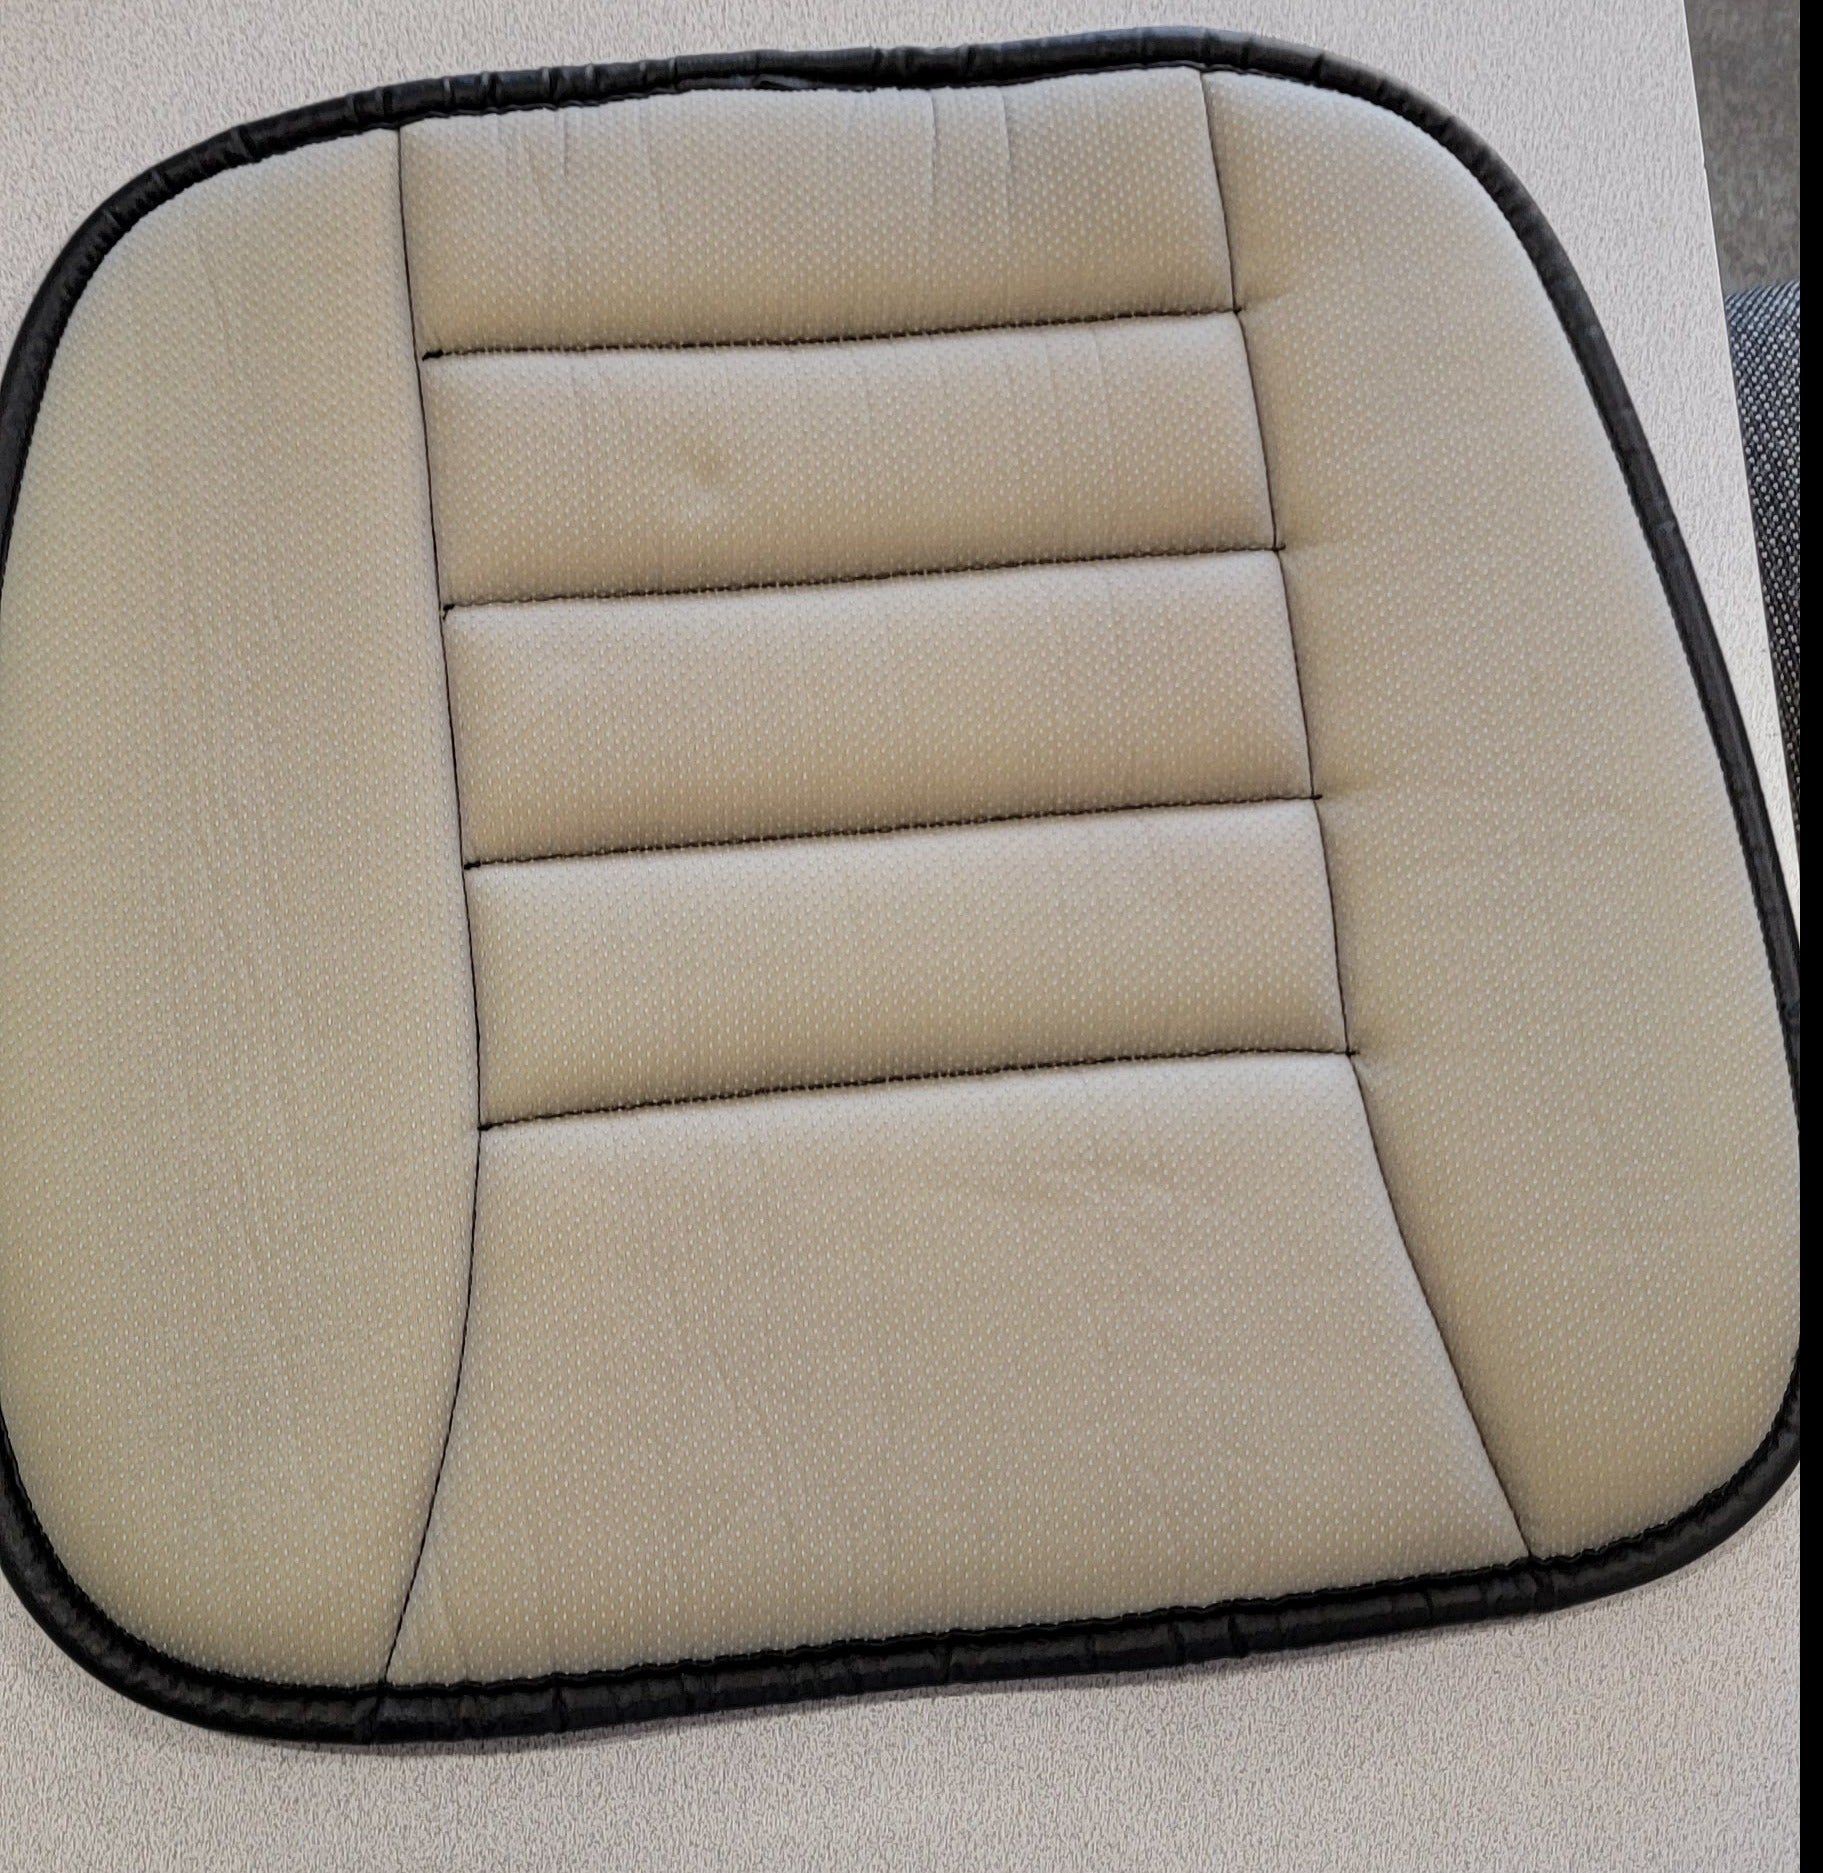 RaoRanDang Car Seat Cushion Pad for Car Driver Seat Office Chair Home Use  Memory Foam Seat Cushion